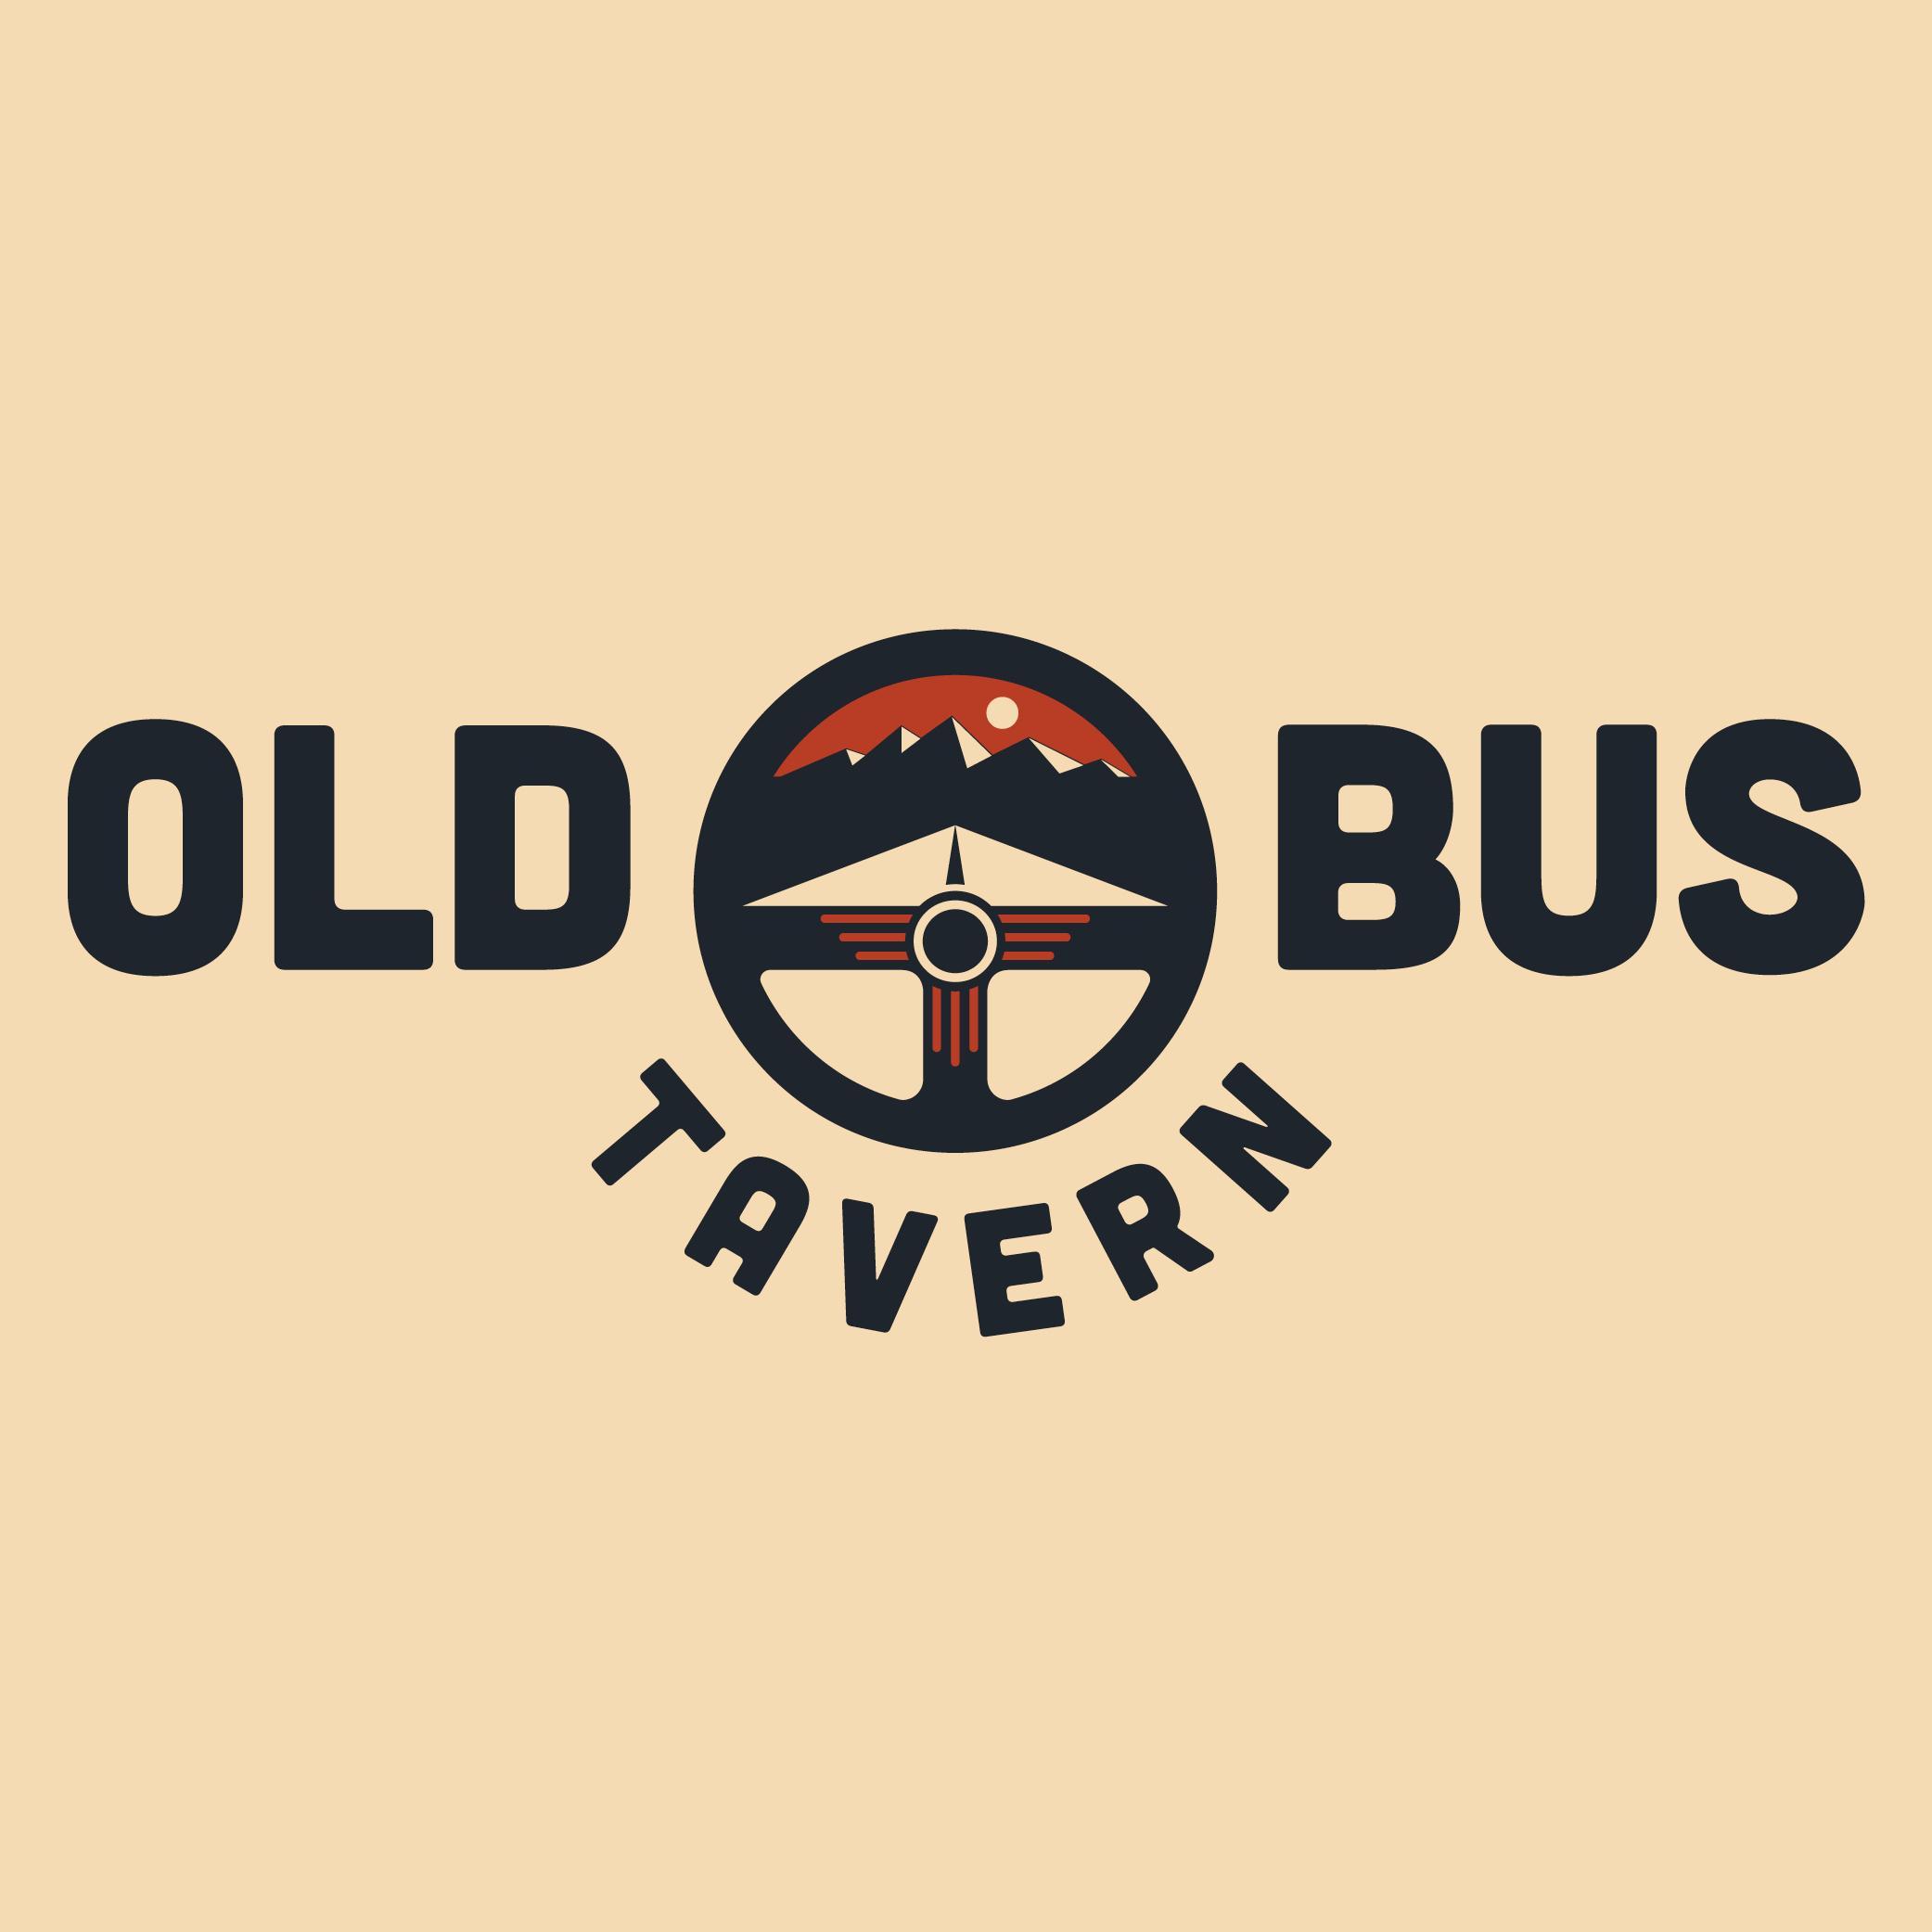 Old bus tavern